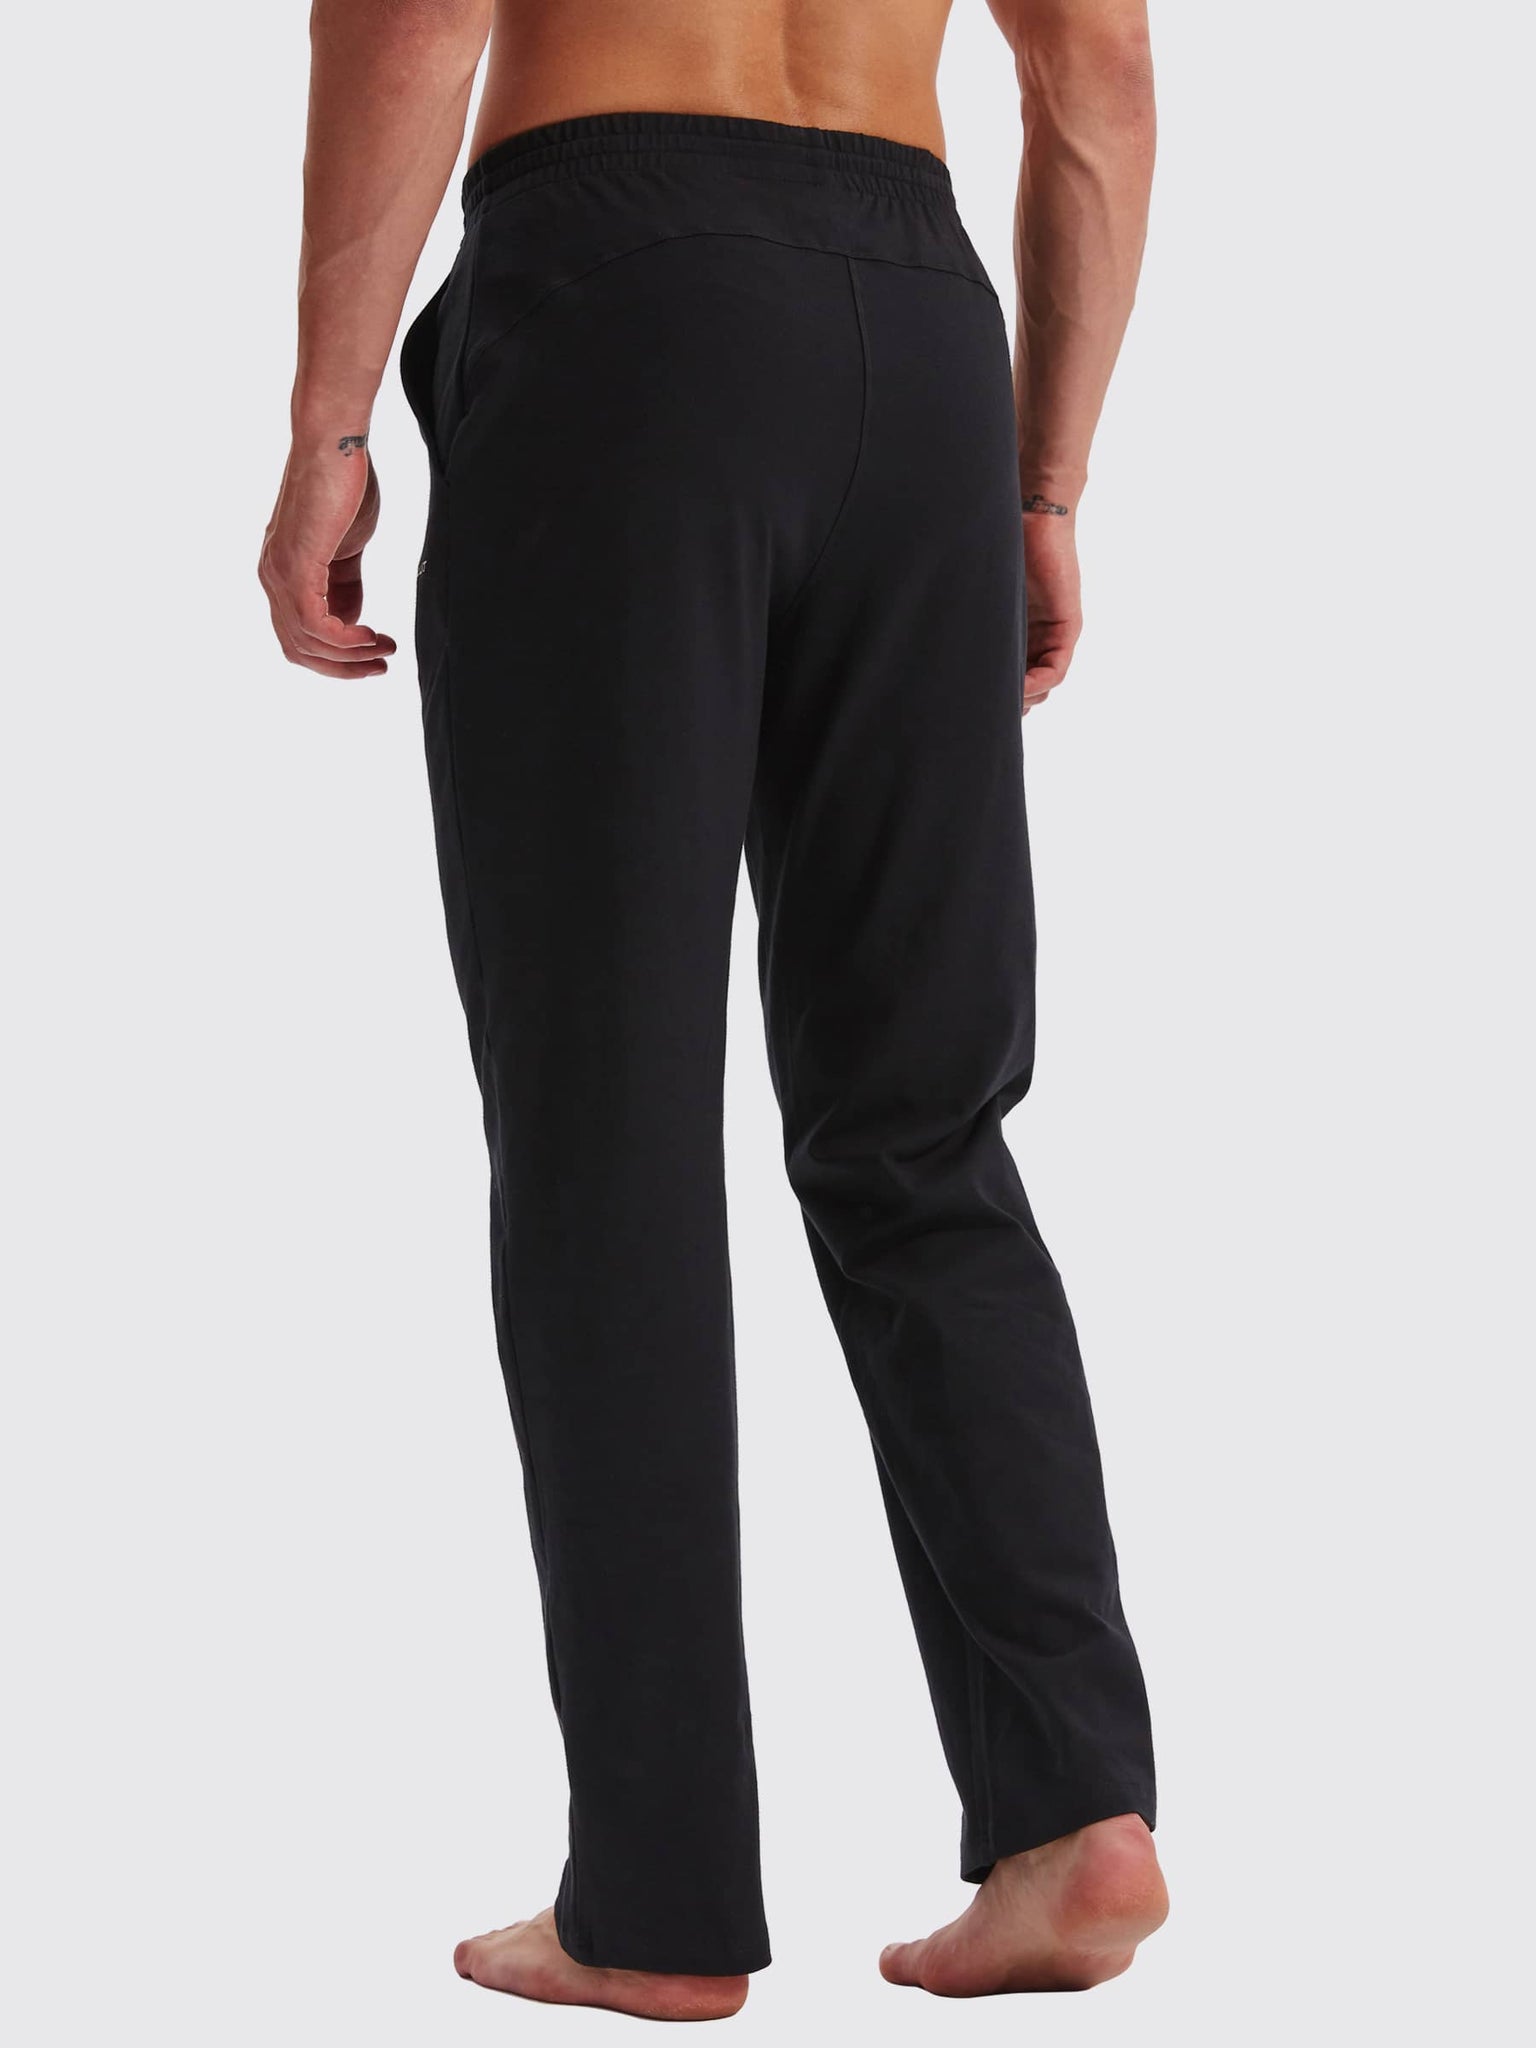 Men's Cotton Yoga Balance Sweatpants_Black_model5